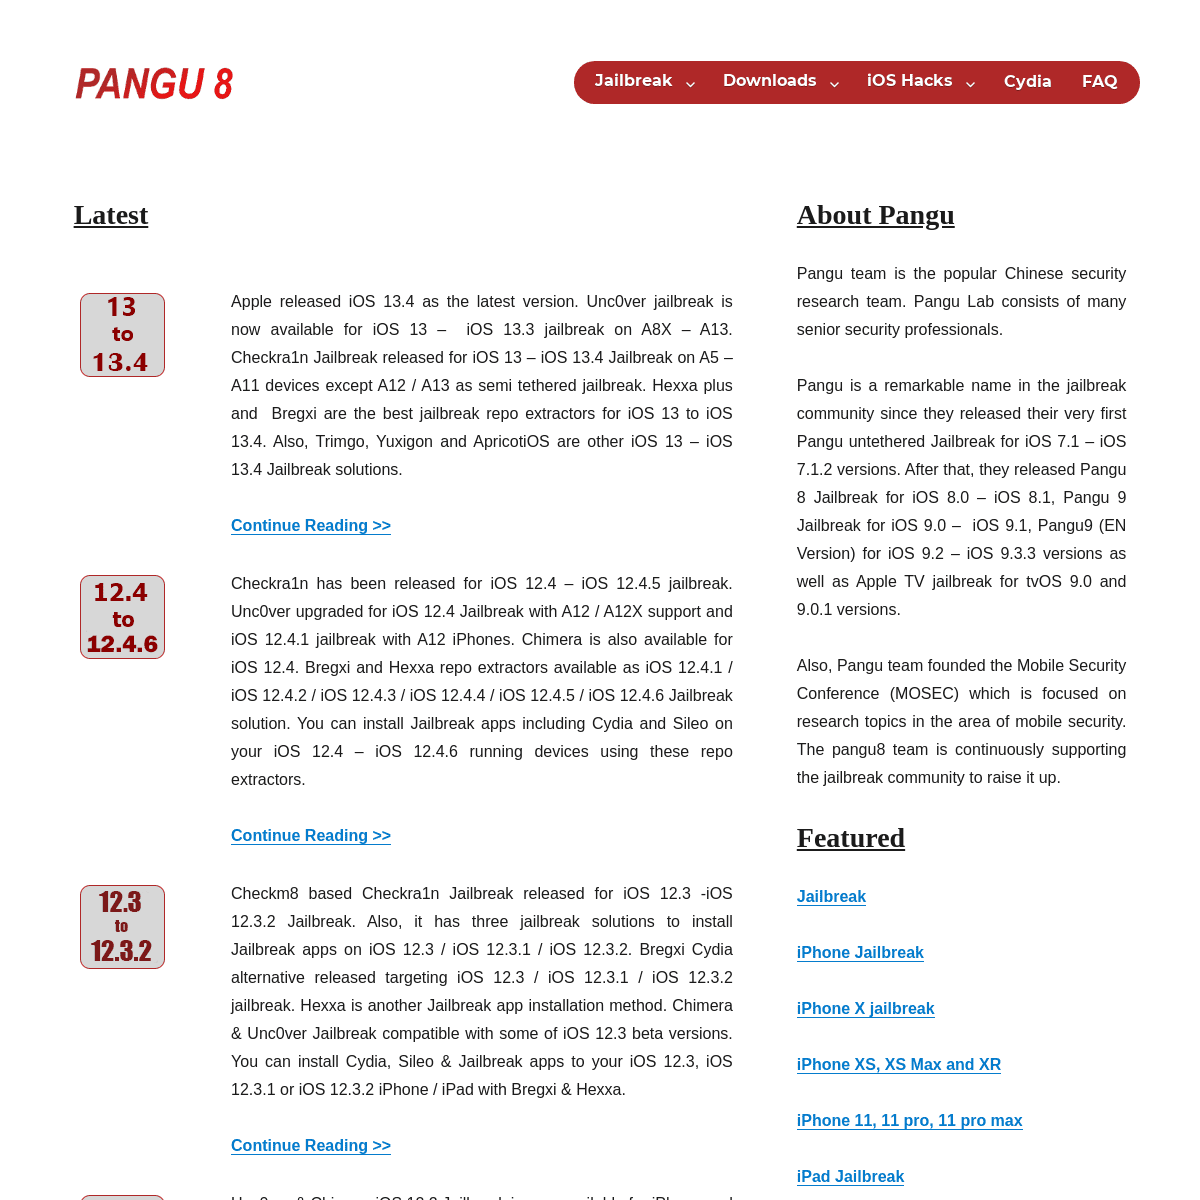 A complete backup of pangu8.com